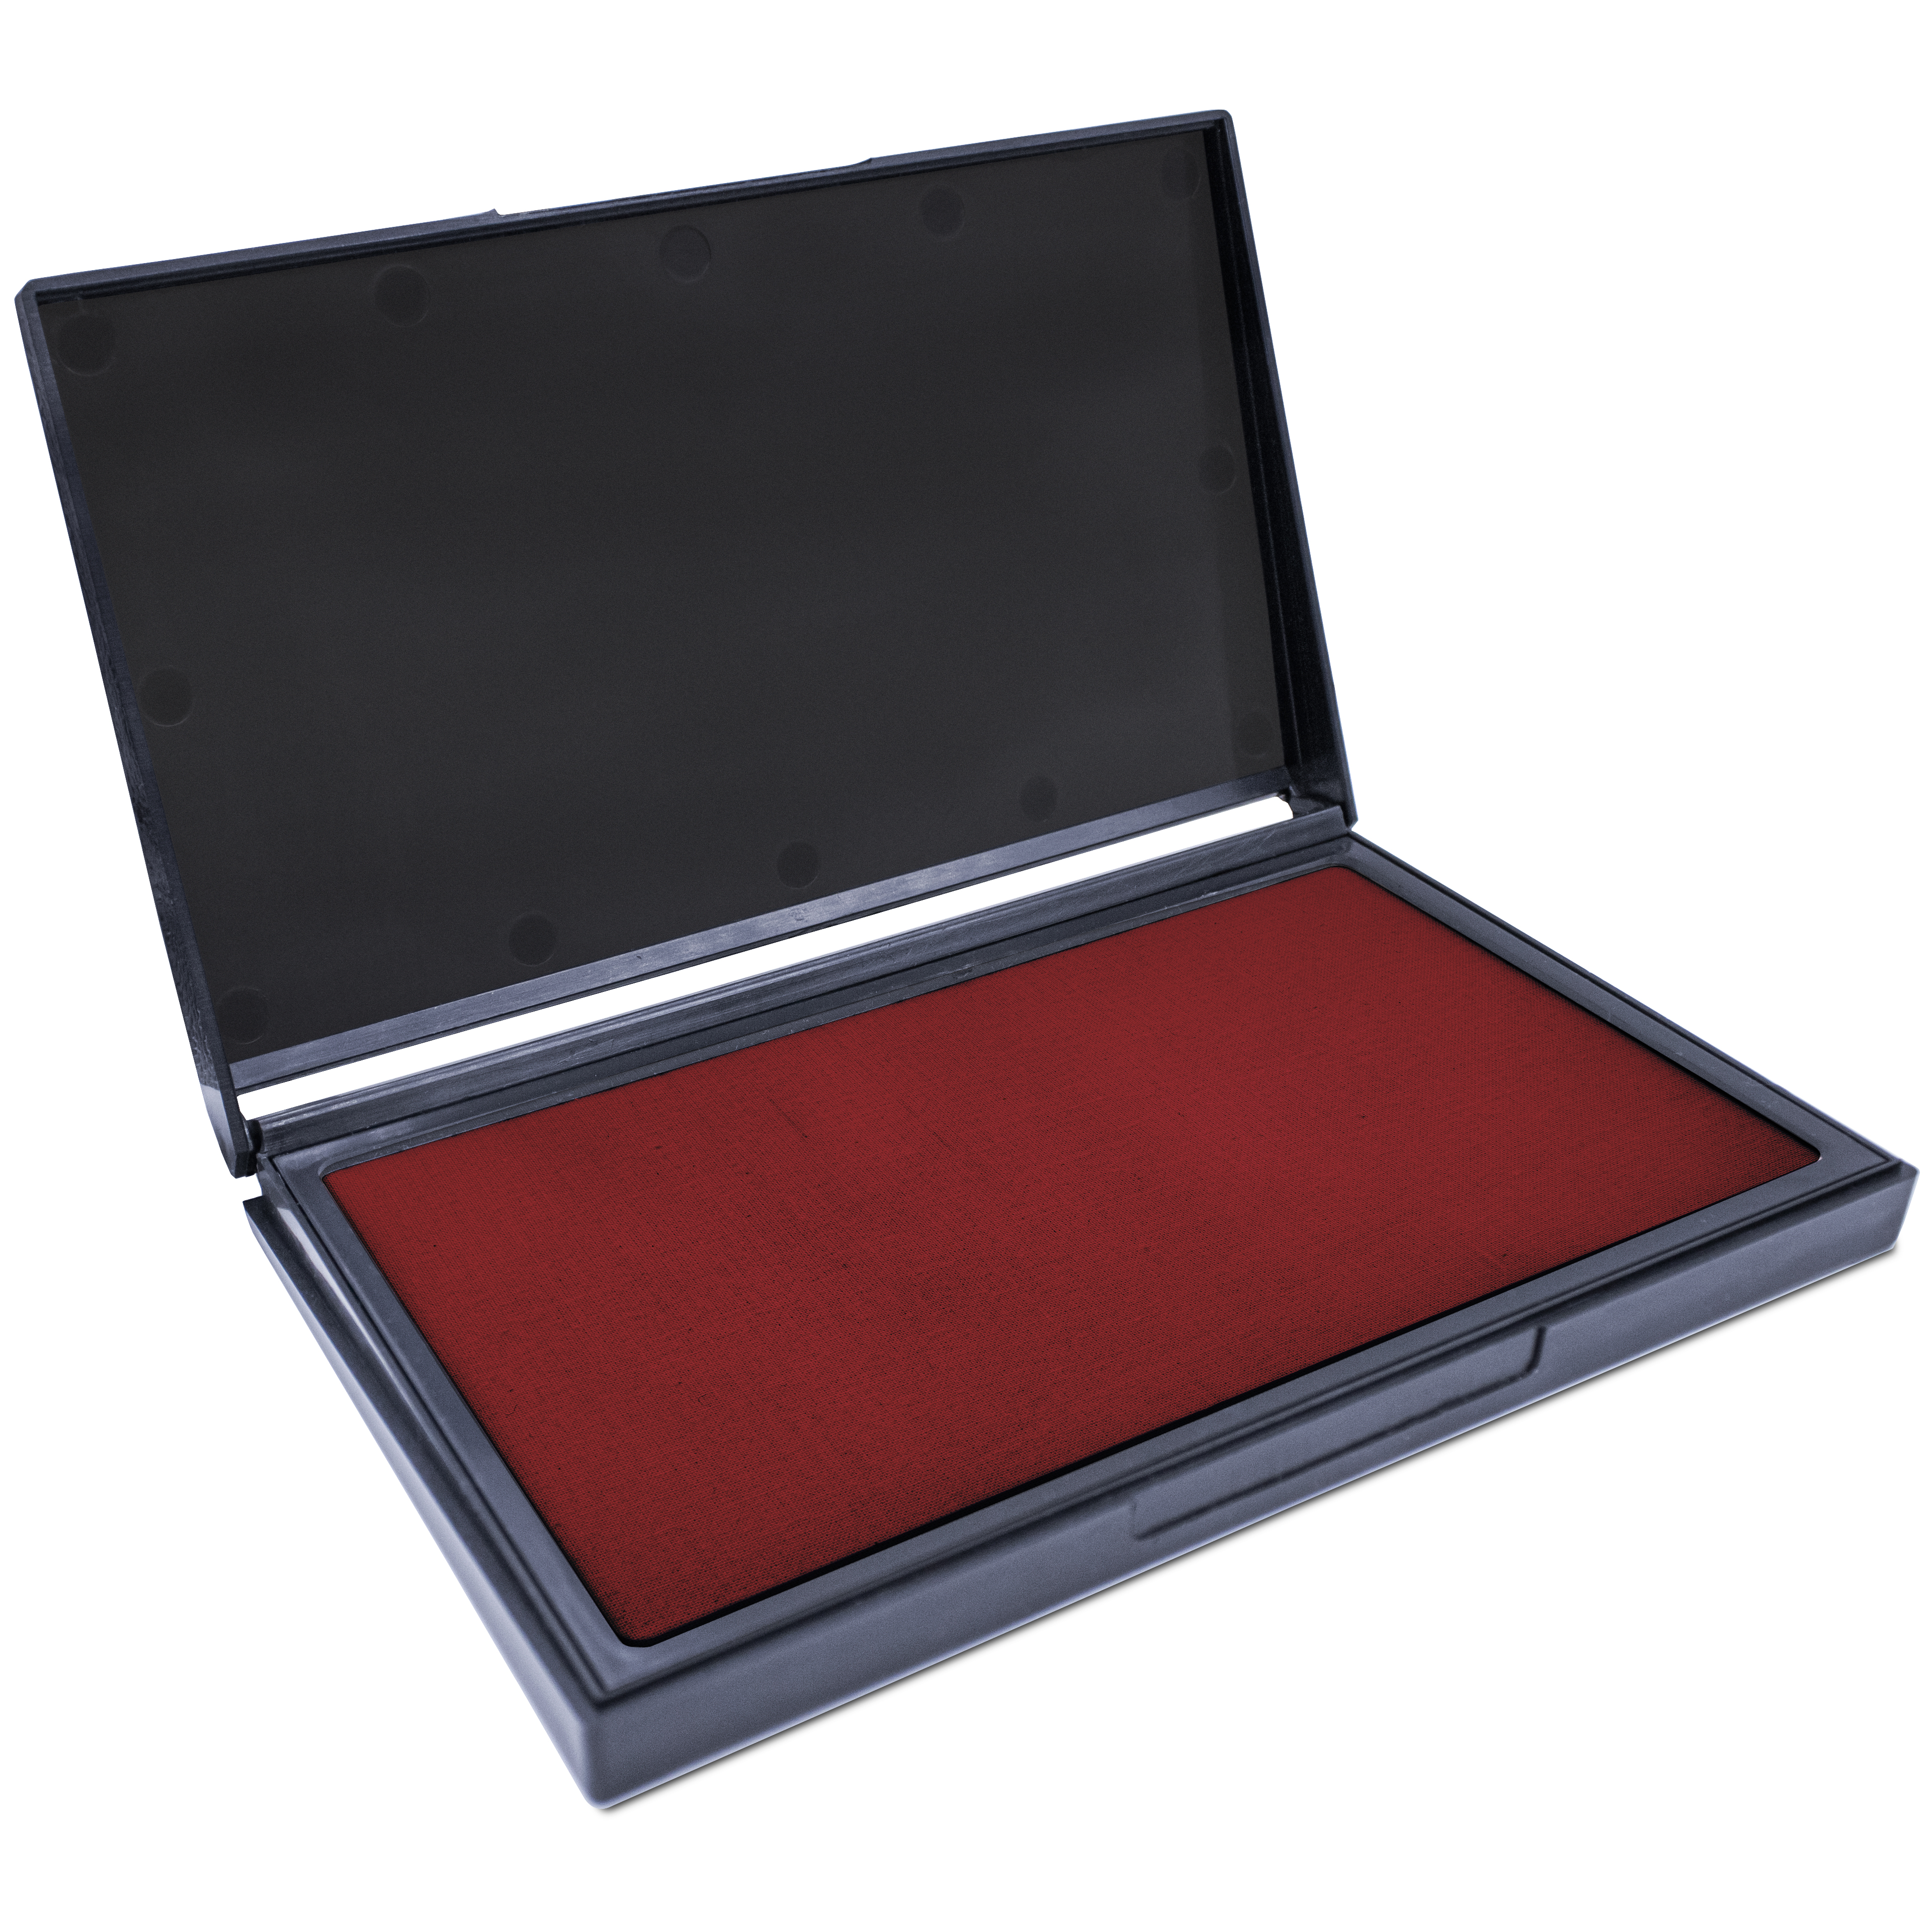 MaxMark Large Crimson Red Stamp Pad - 4-1/4 by 7-1/4 - Premium Quality Felt Pad